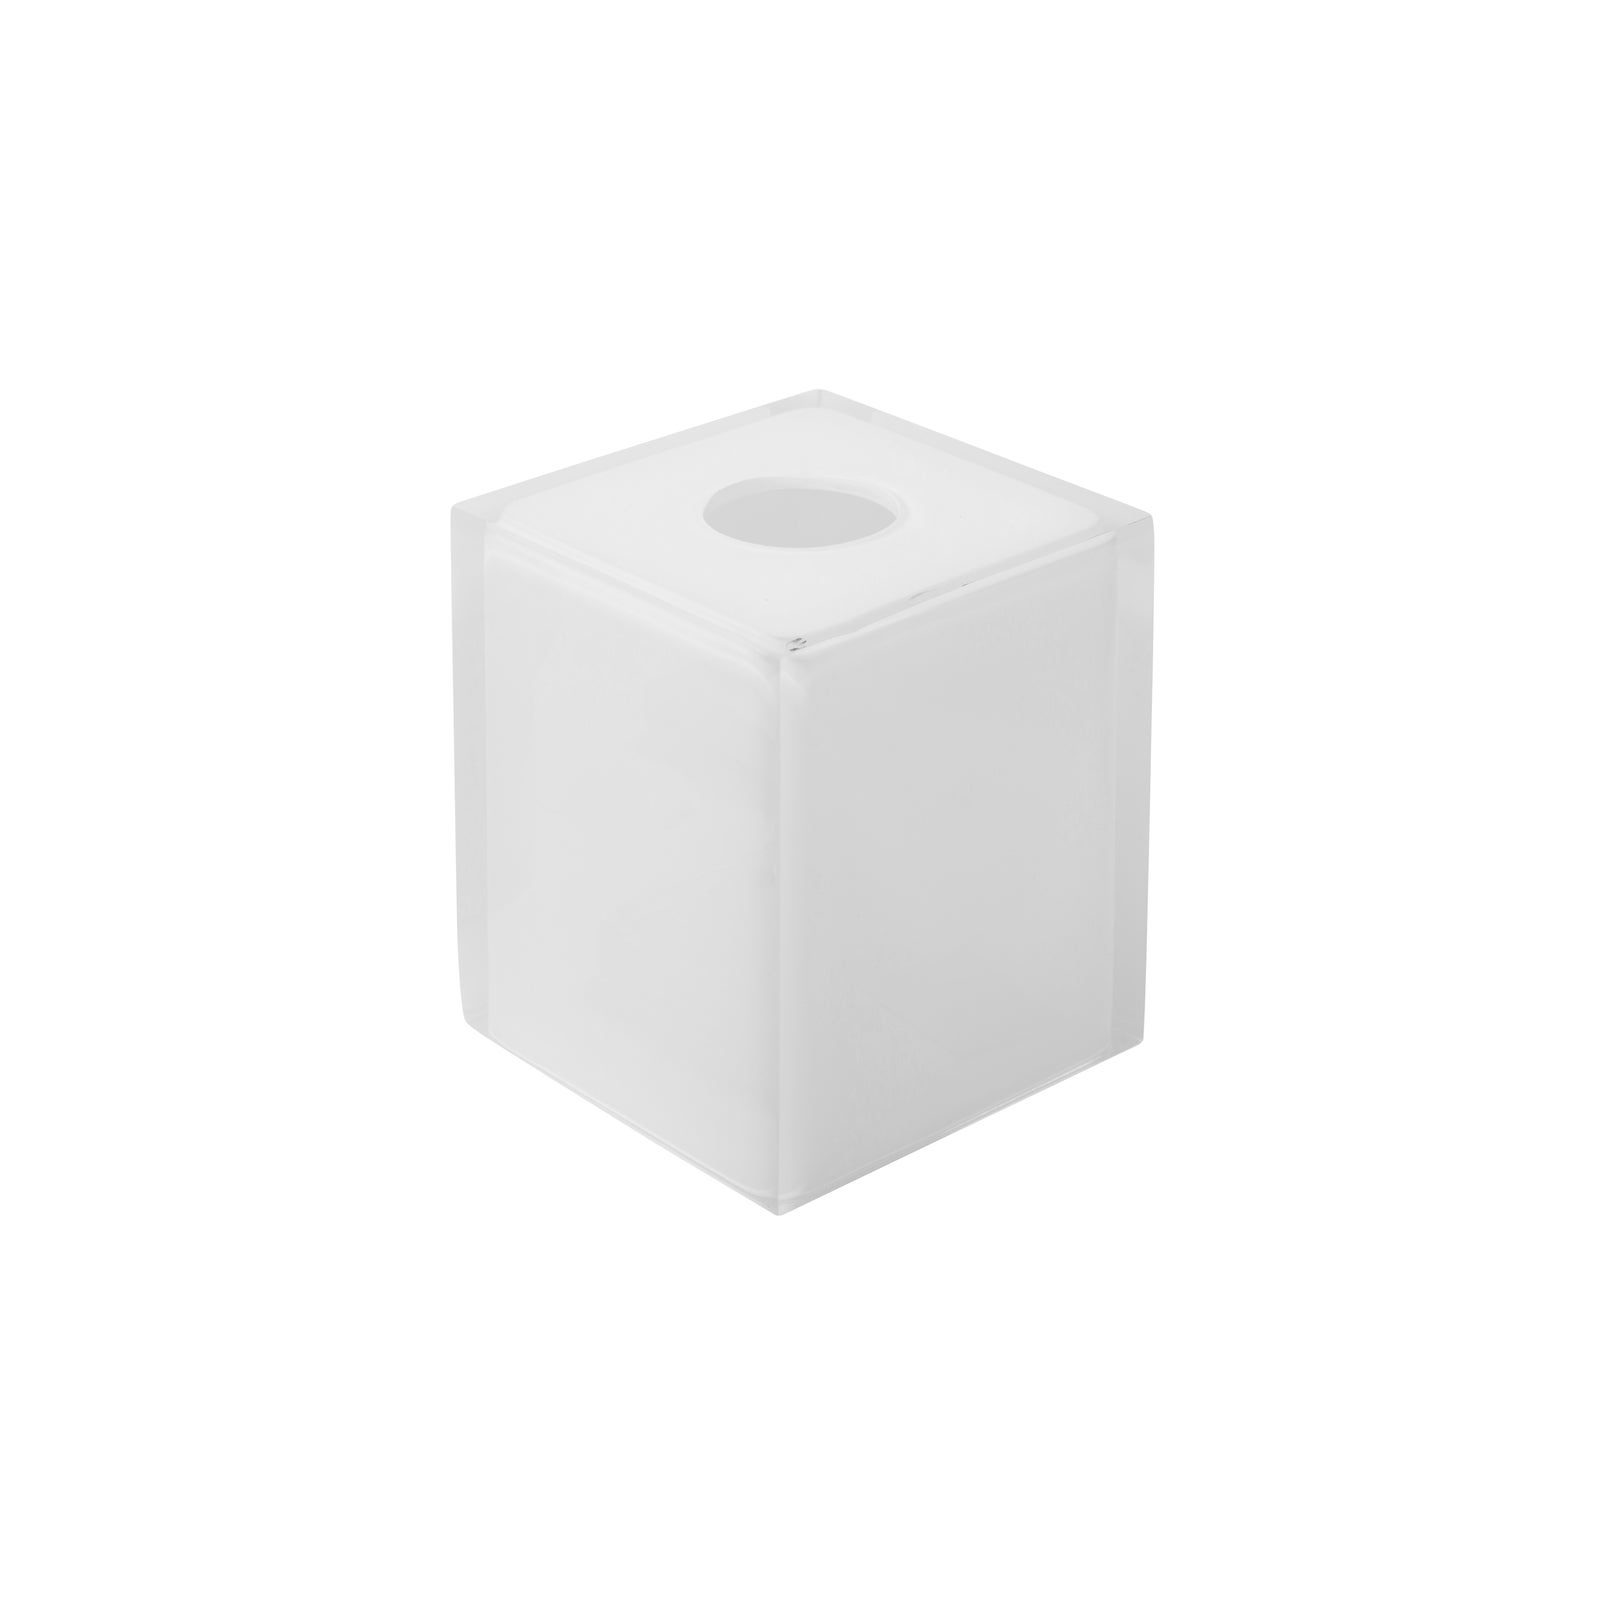 White Resin Tissue Box Square